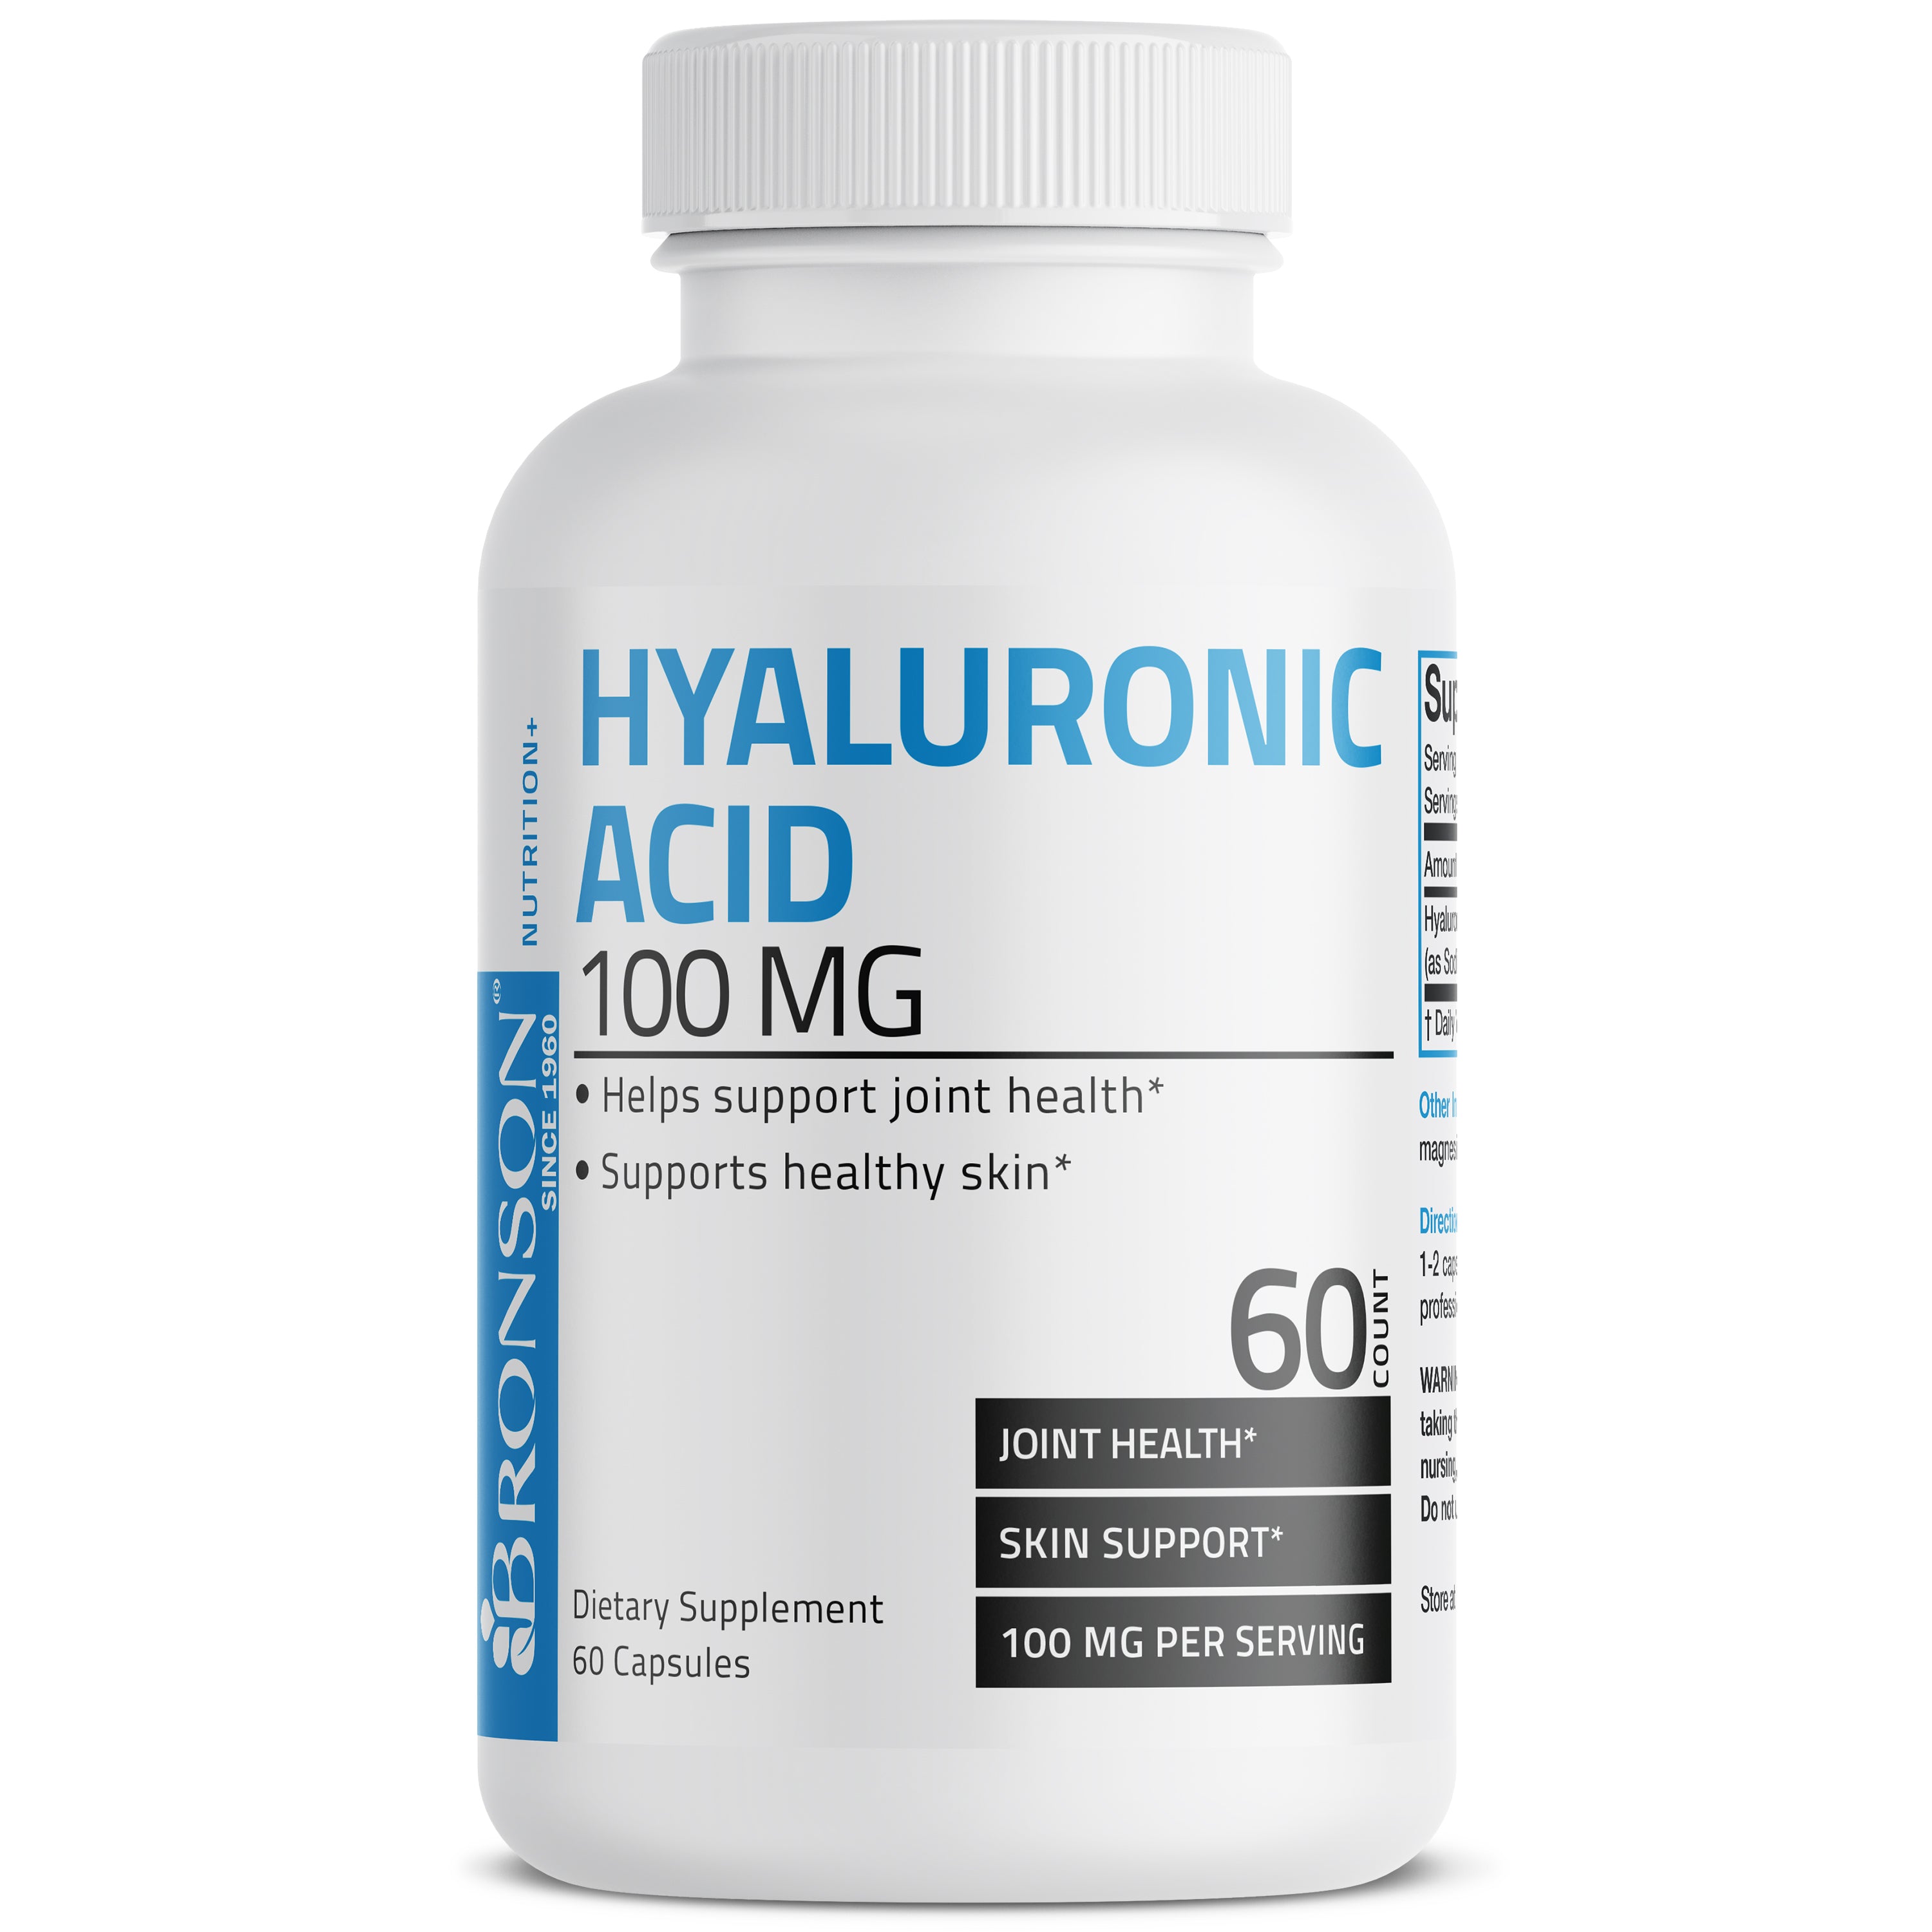 Hyaluronic Acid - 100 mg (Per 2 Capsules) view 3 of 6